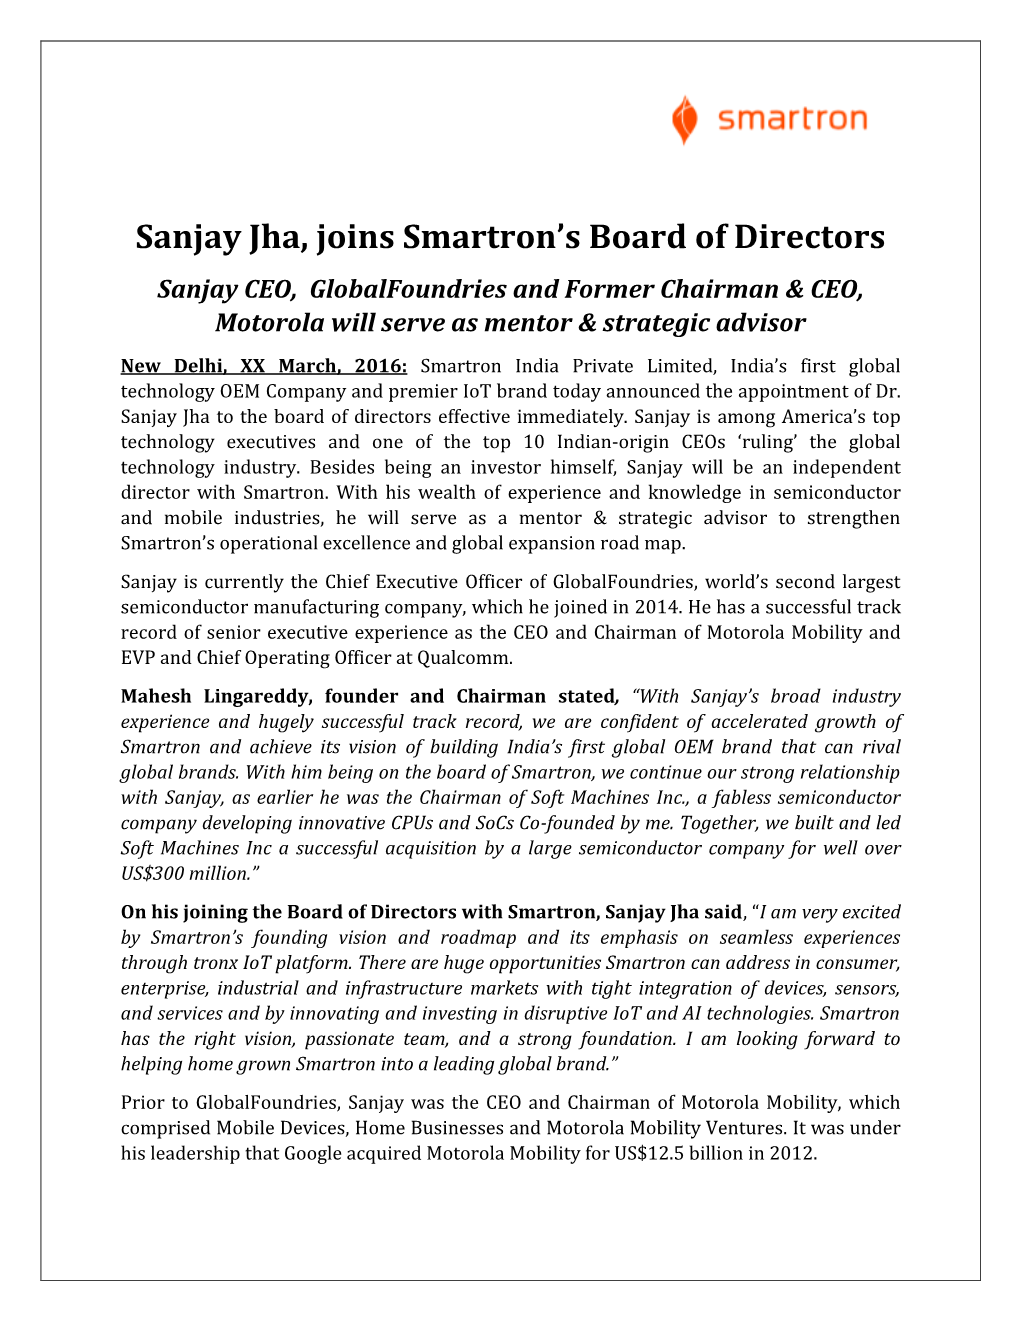 Sanjay Jha, Joins Smartron's Board of Directors